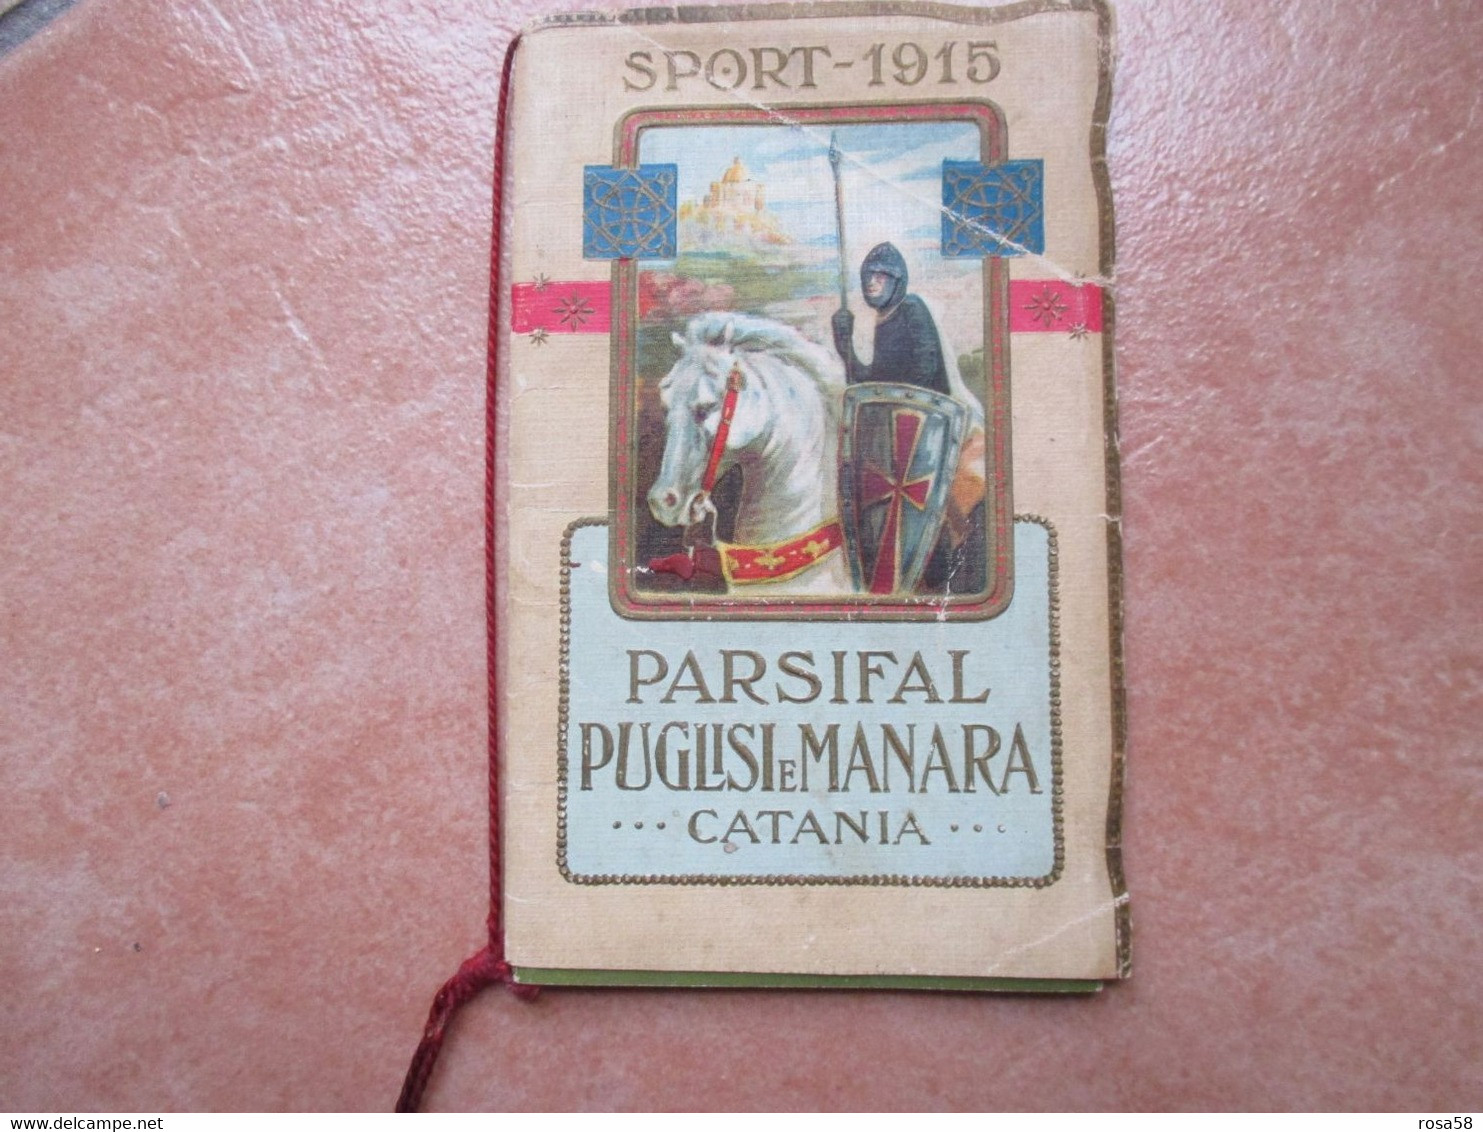 SPORT 1915 PARSIFAL Puglisi E Manara CATANIA Profumerie Igieniche - Groot Formaat: 1901-20